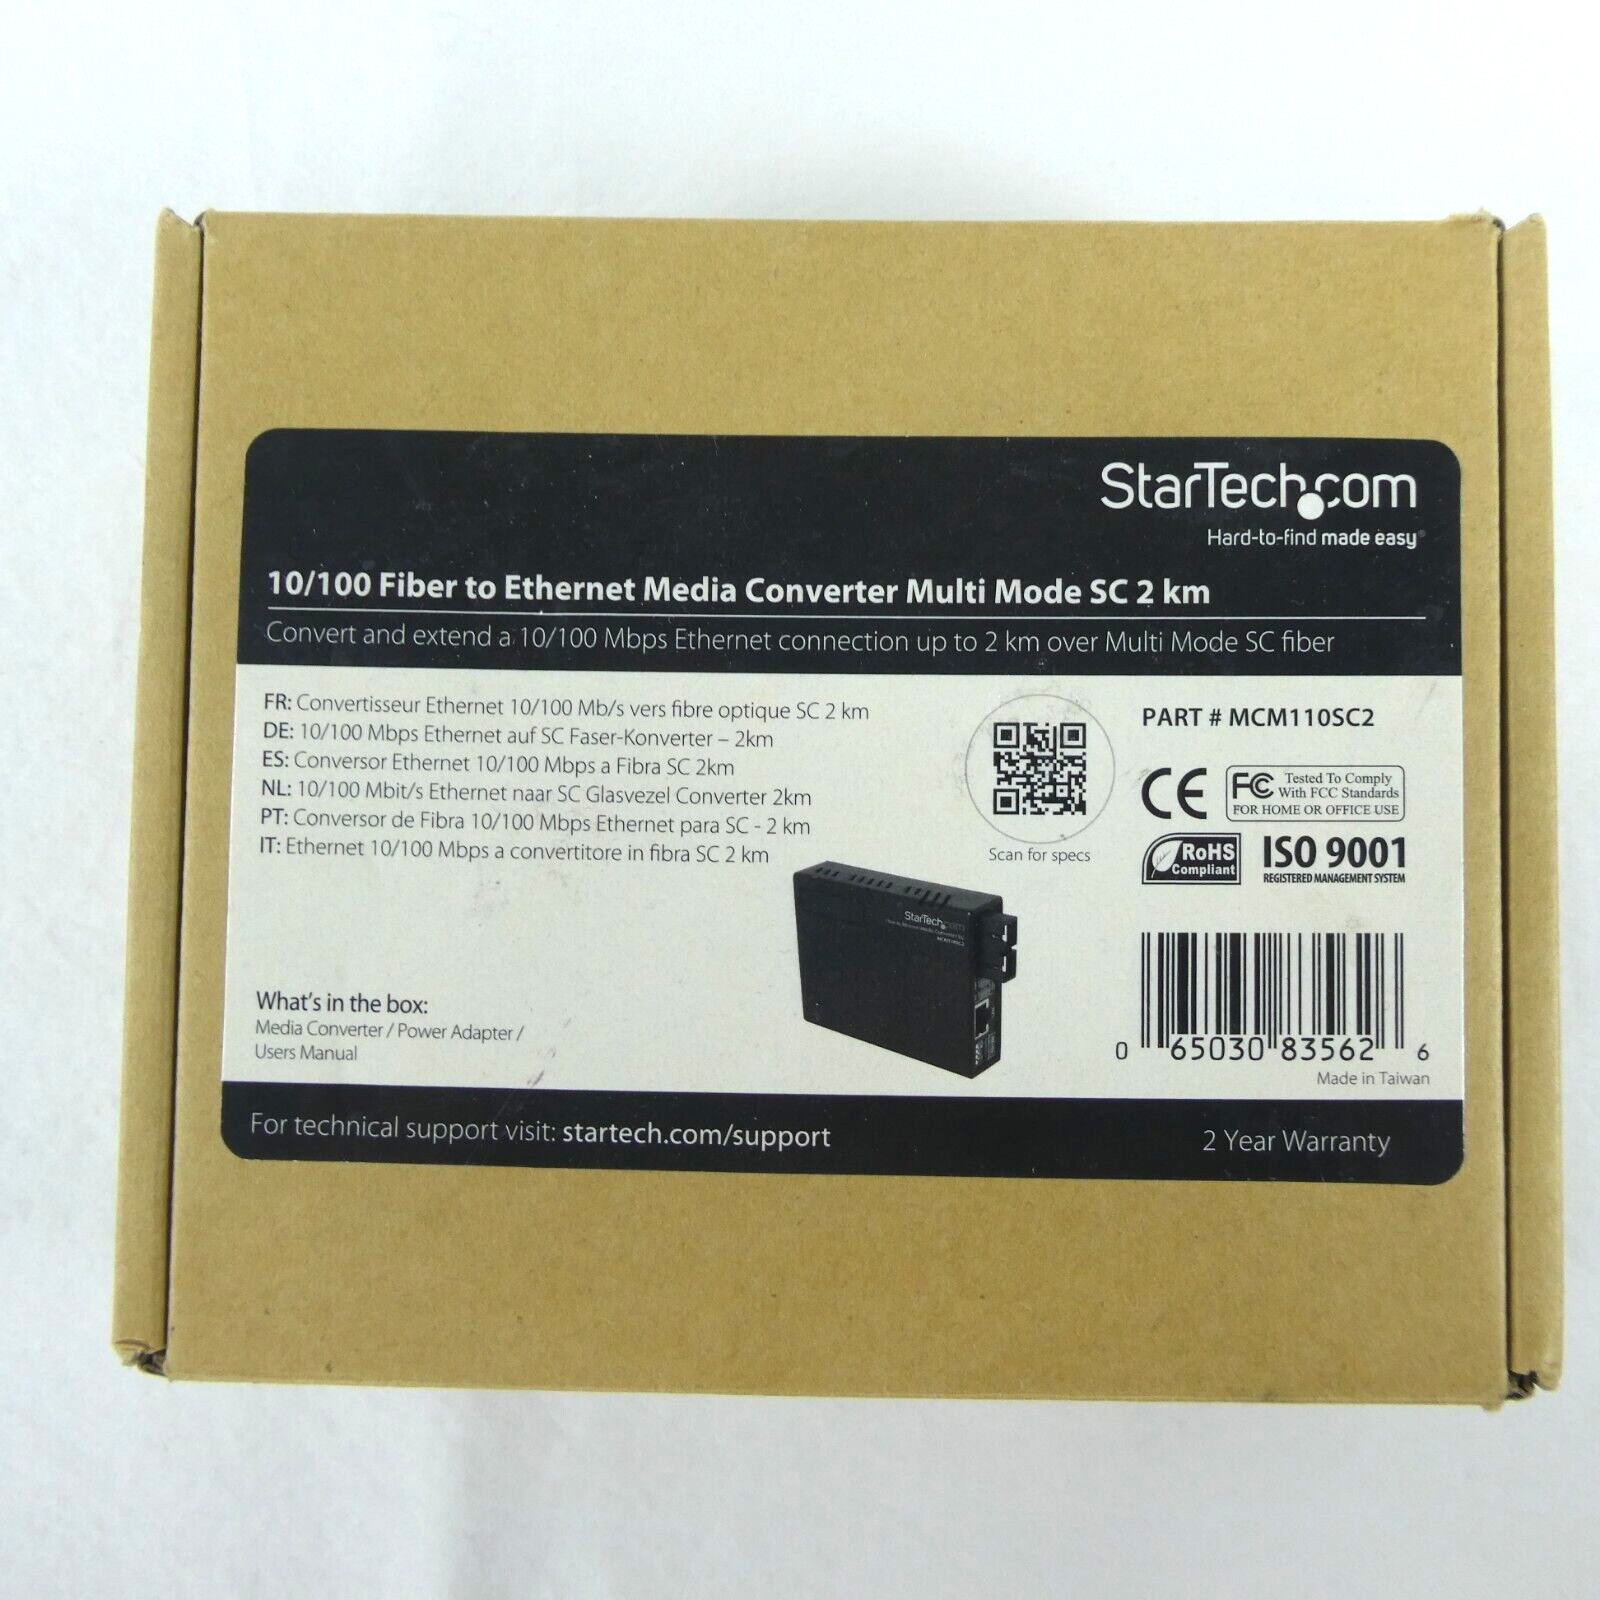 StarTech MCM110SC2 SC 2 km 10/100 Fiber to Ethernet Media Converter No Power